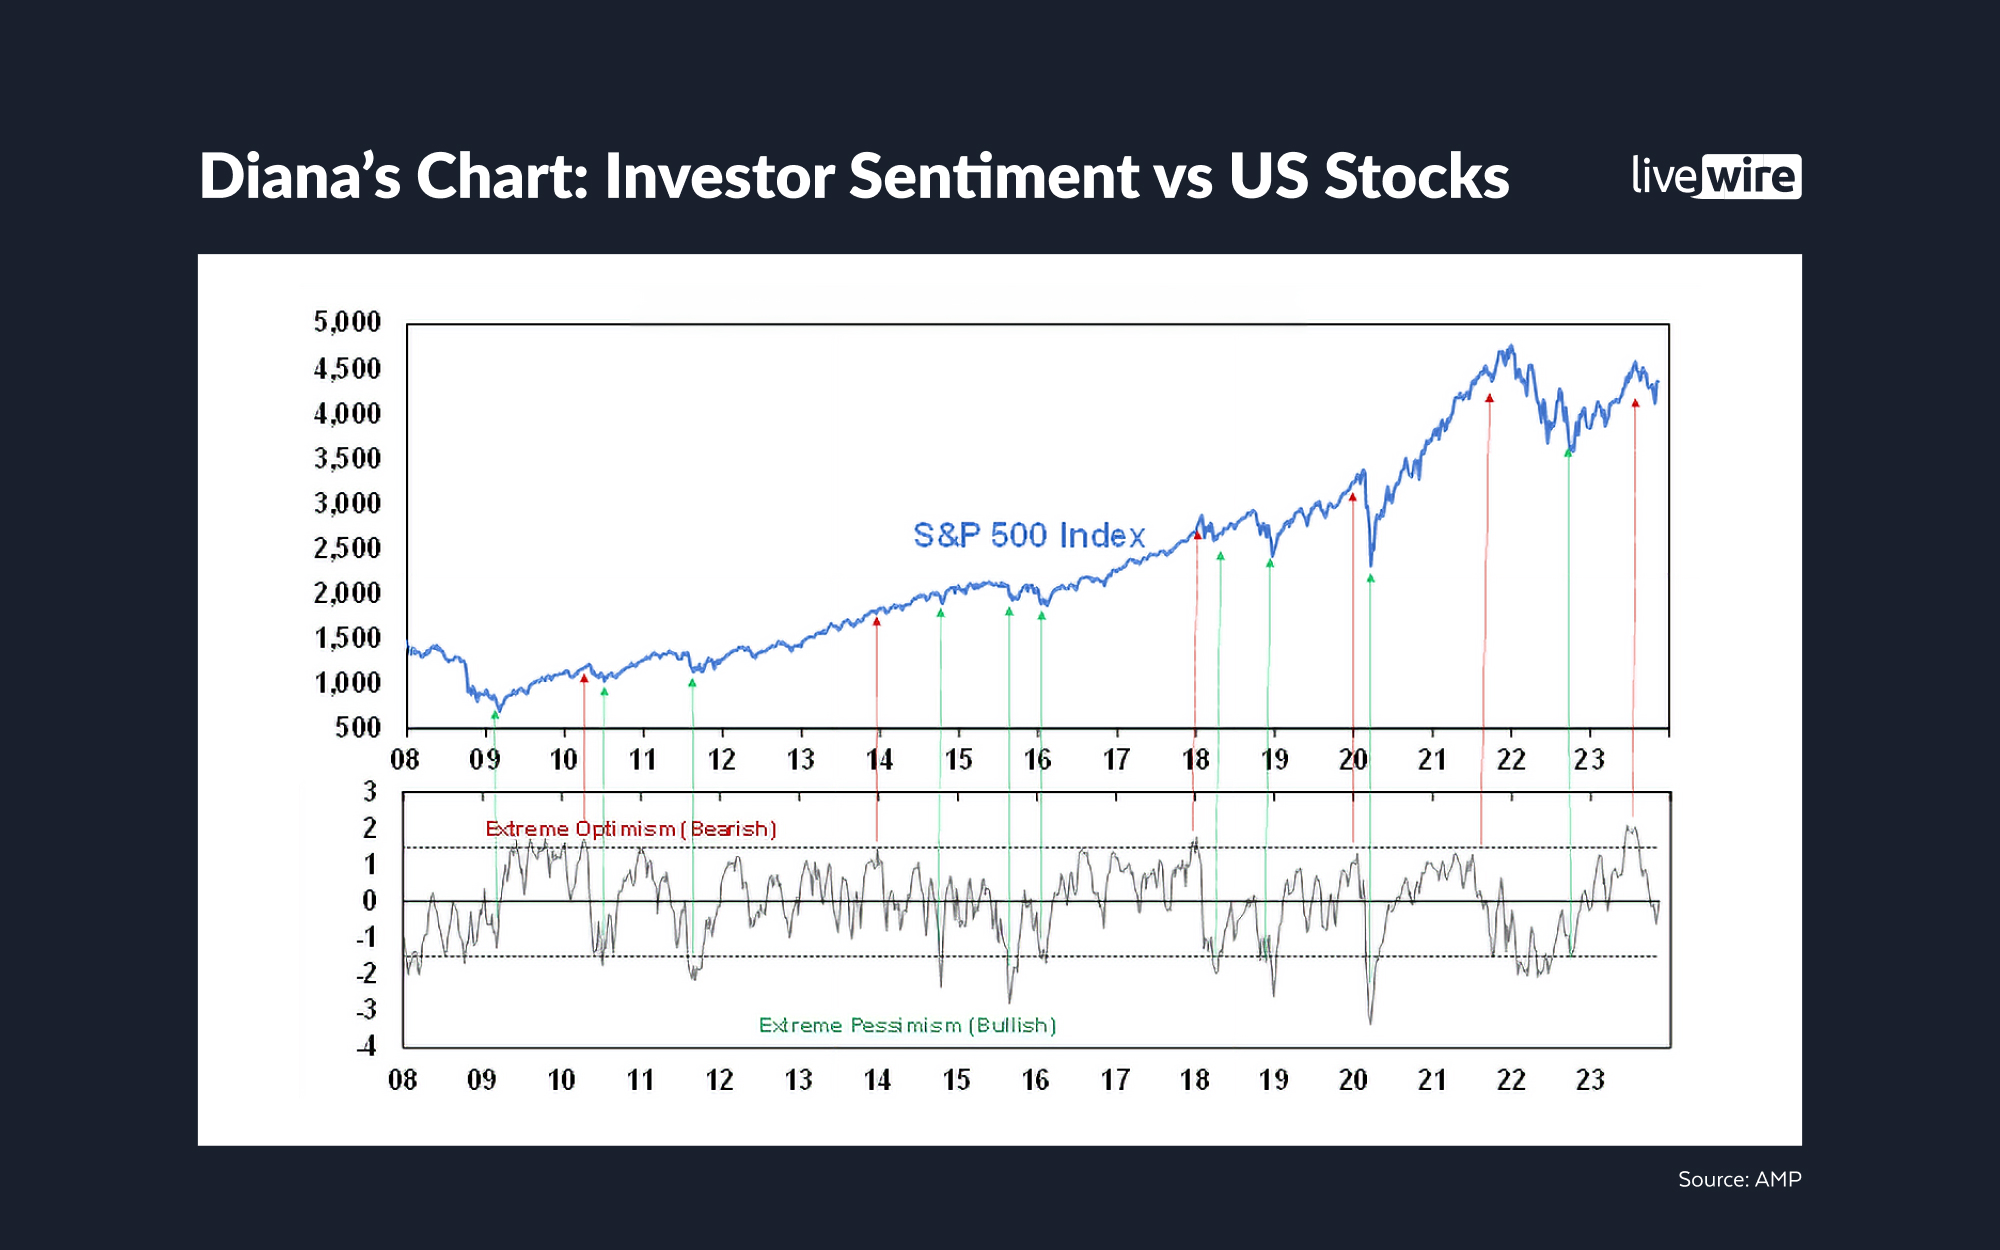 Dianas Chart - Investor Sentiment vs US Stocks